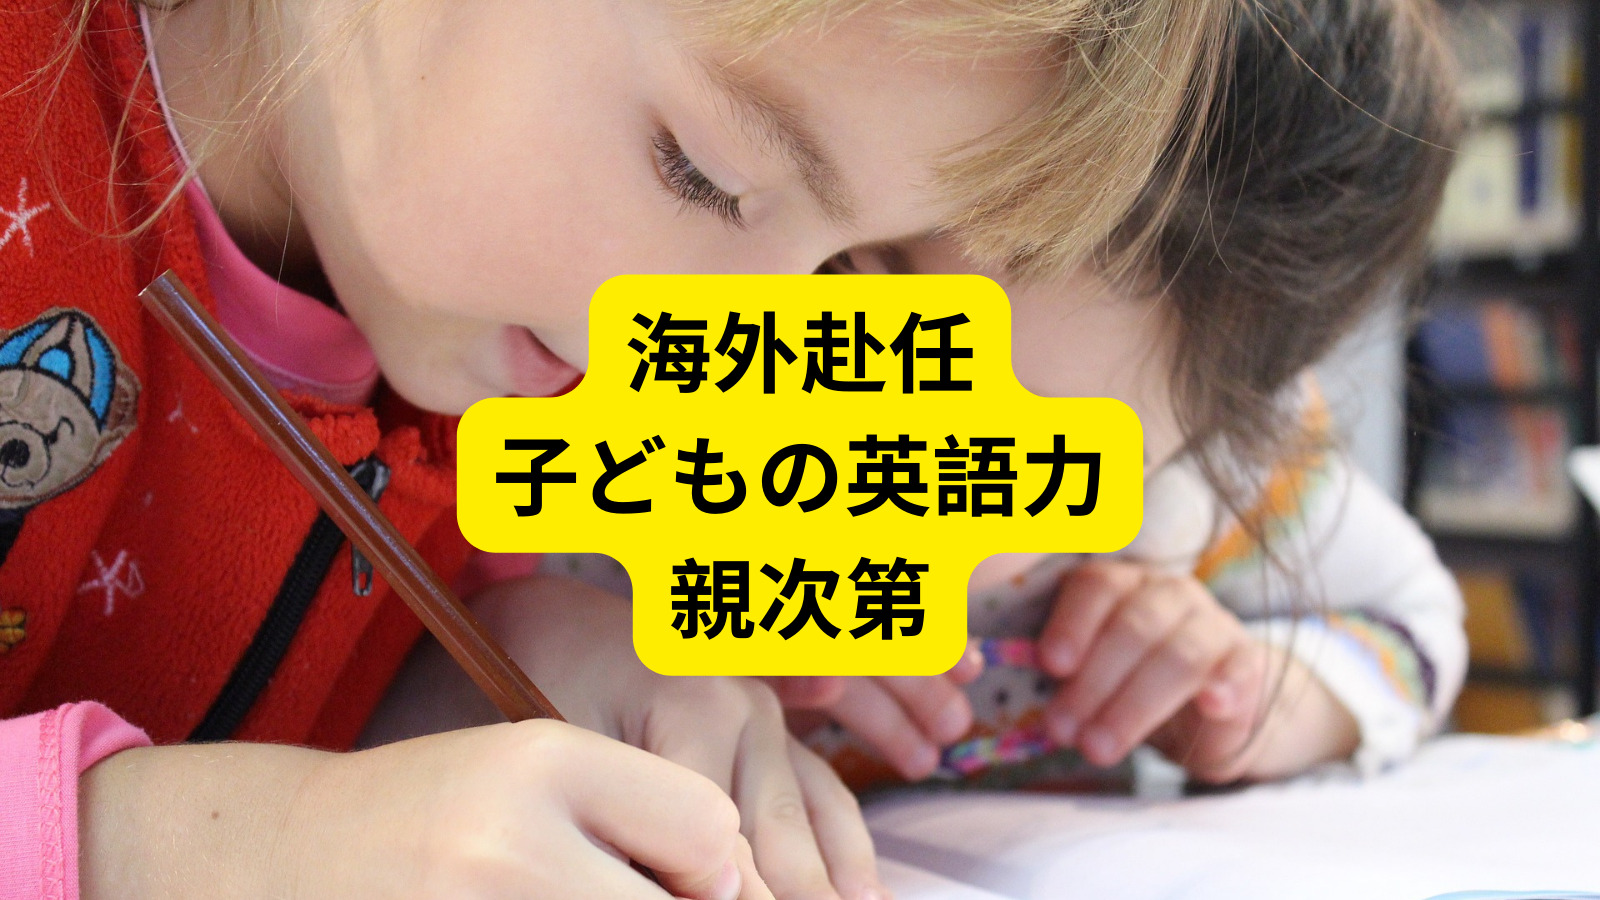 How to improve kid's english skill